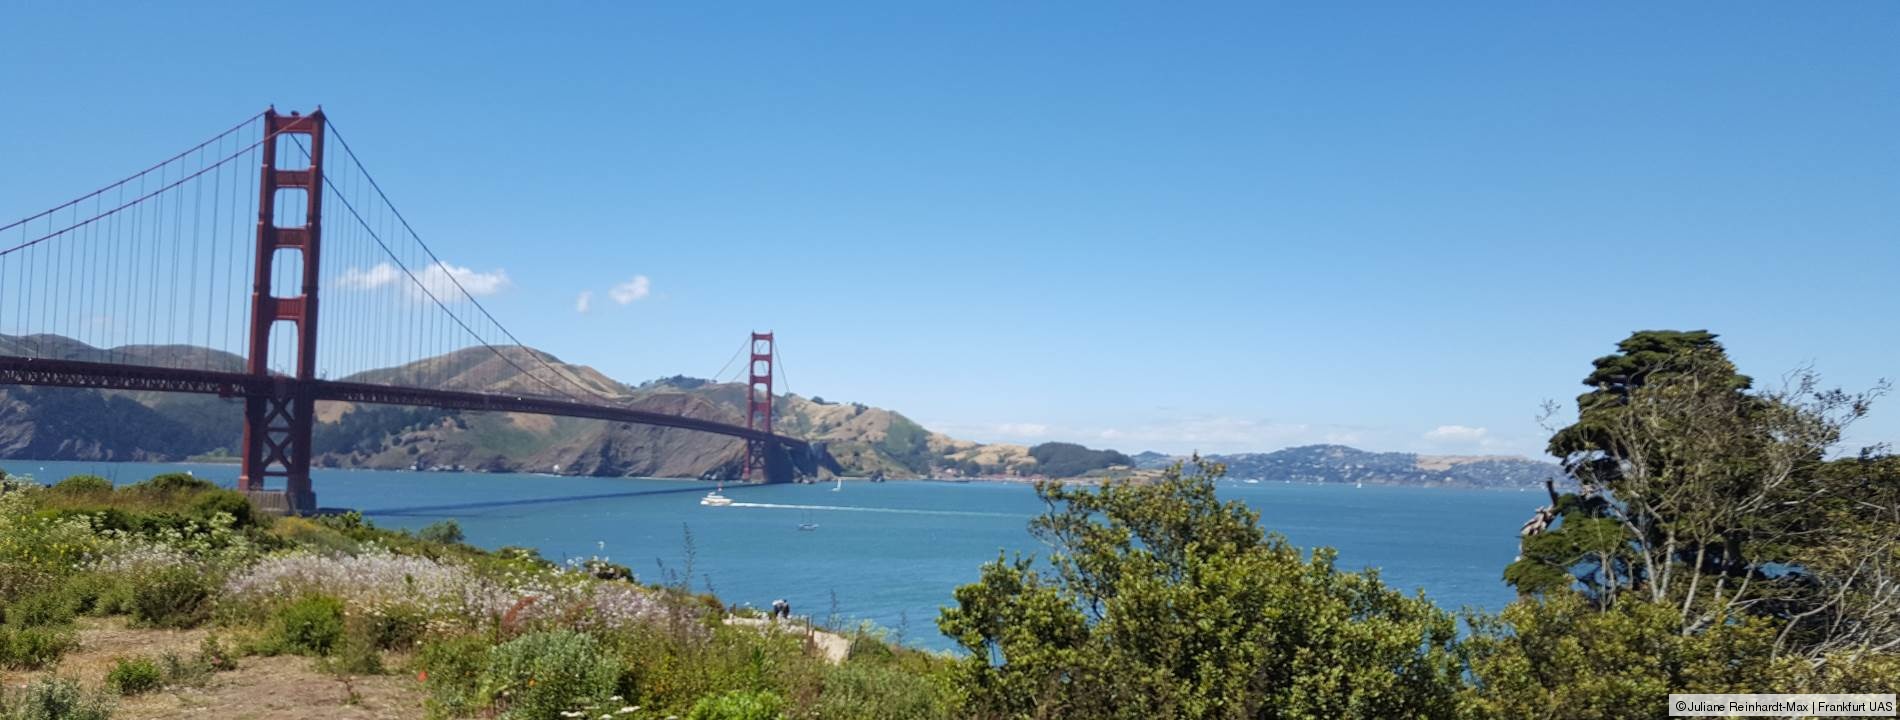 Golden Gate Bridge (USA)